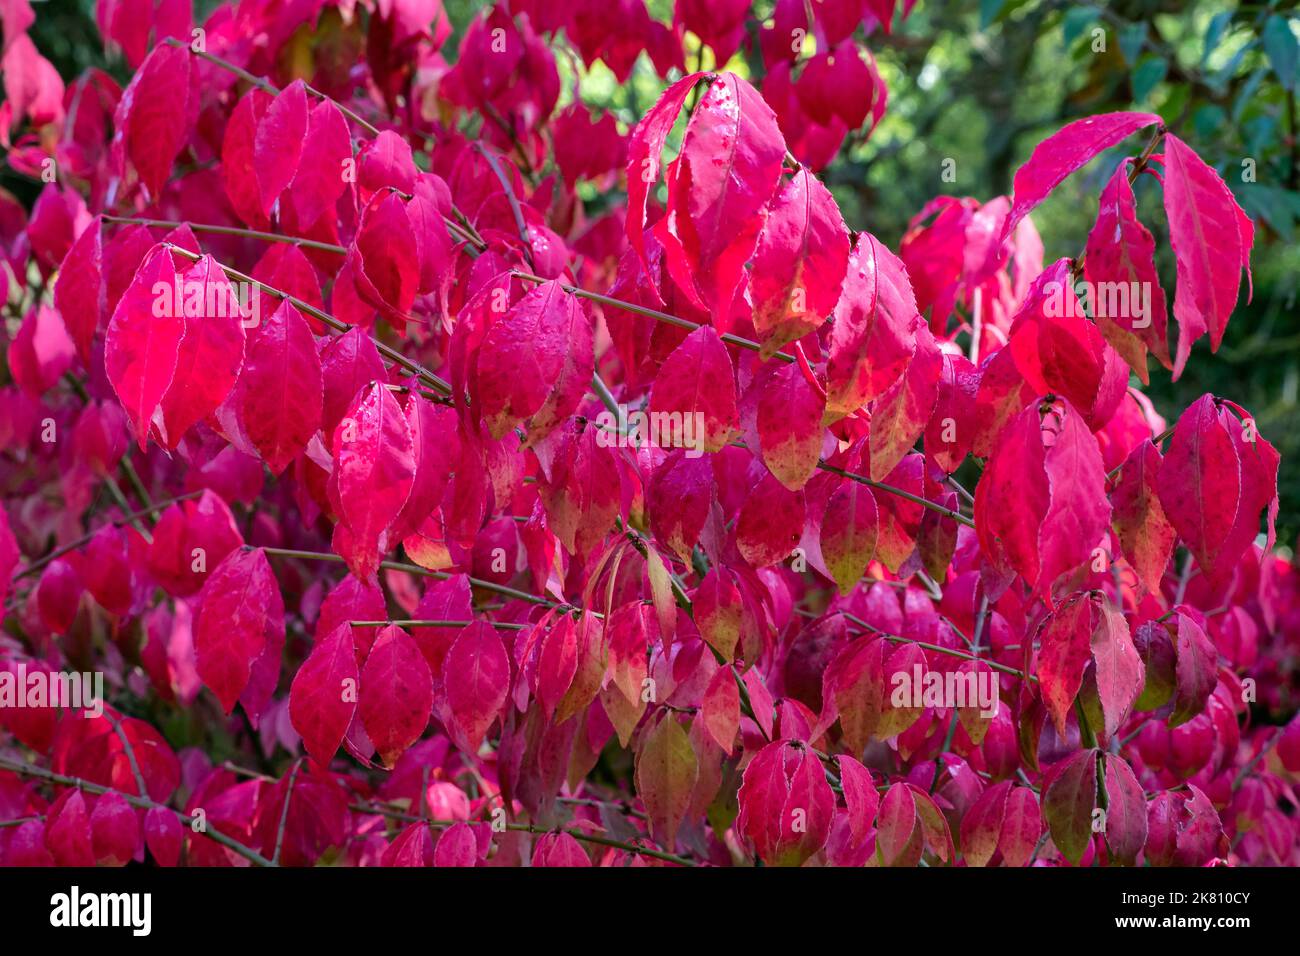 Bright red autumn leaves of ornamental shrub Euonymus alatus Compactus Stock Photo